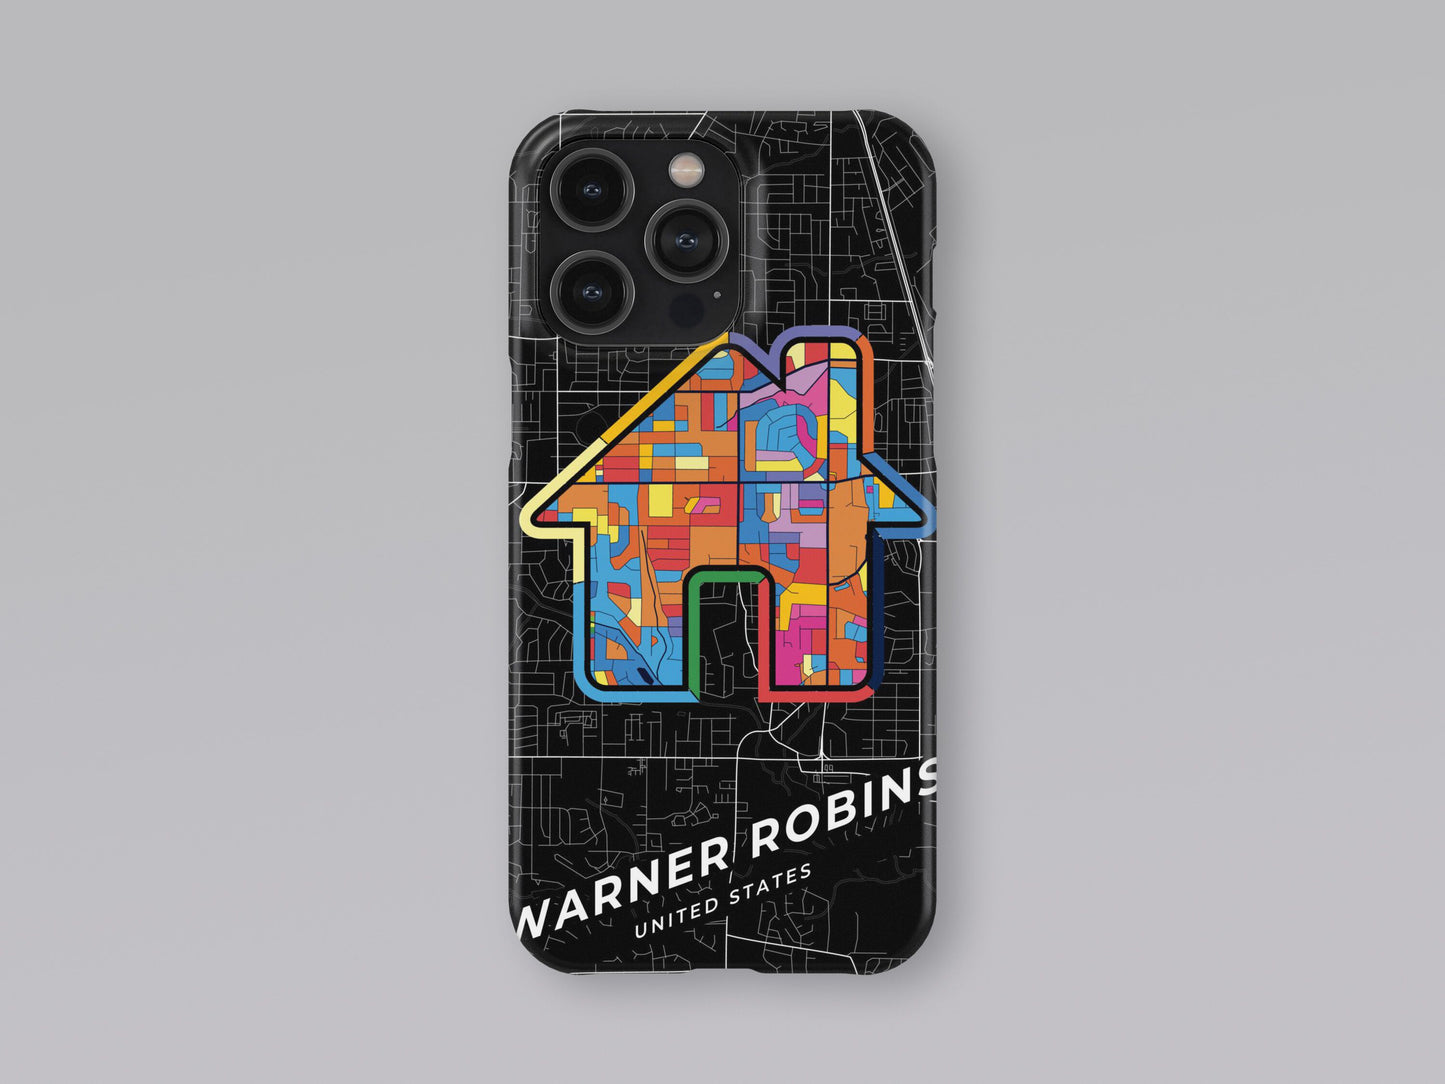 Warner Robins Georgia slim phone case with colorful icon 3